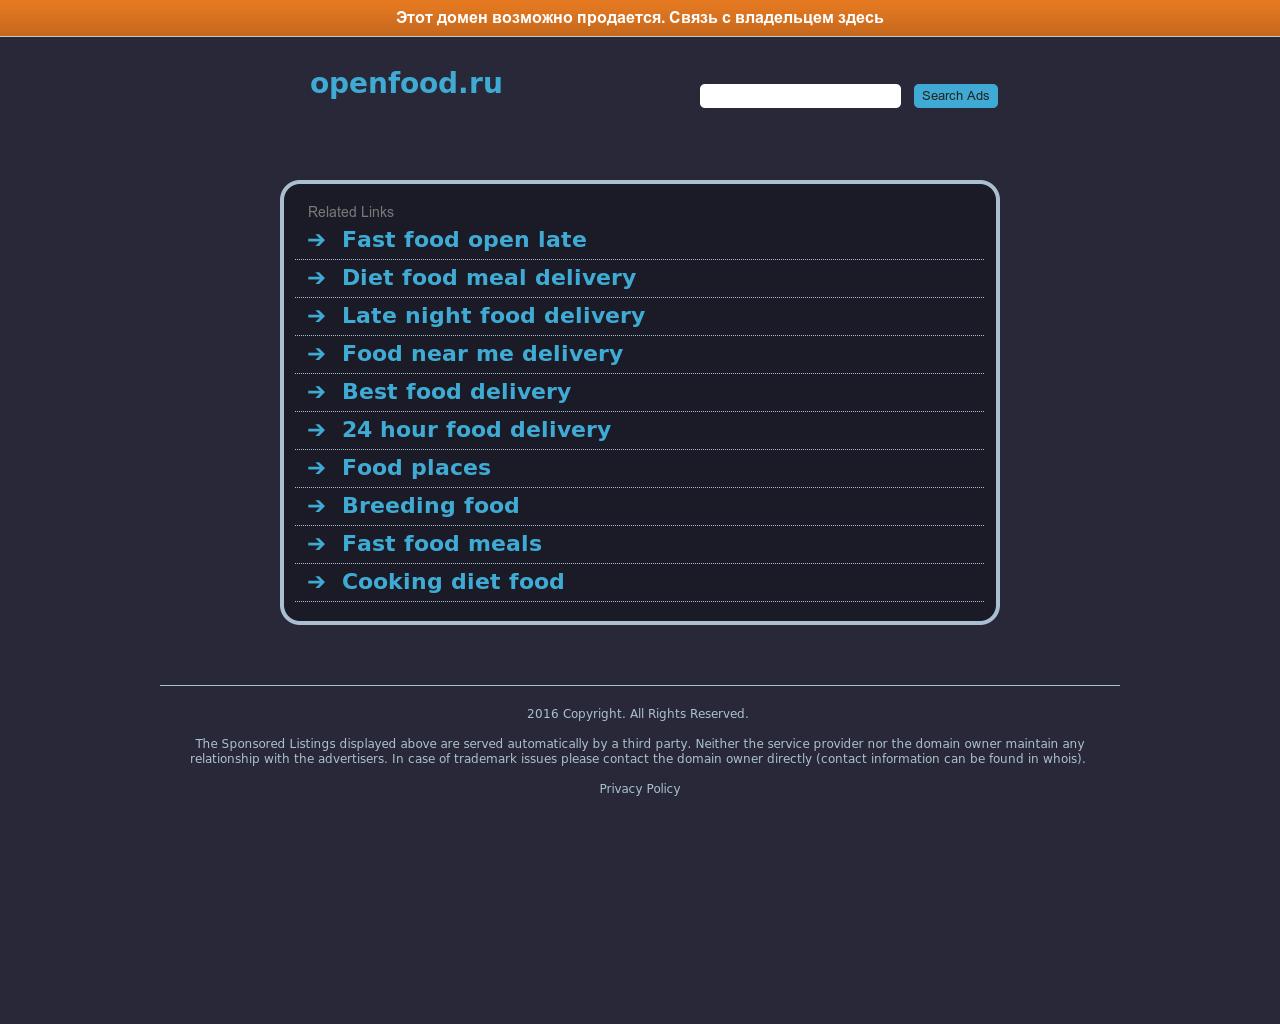 Изображение сайта openfood.ru в разрешении 1280x1024